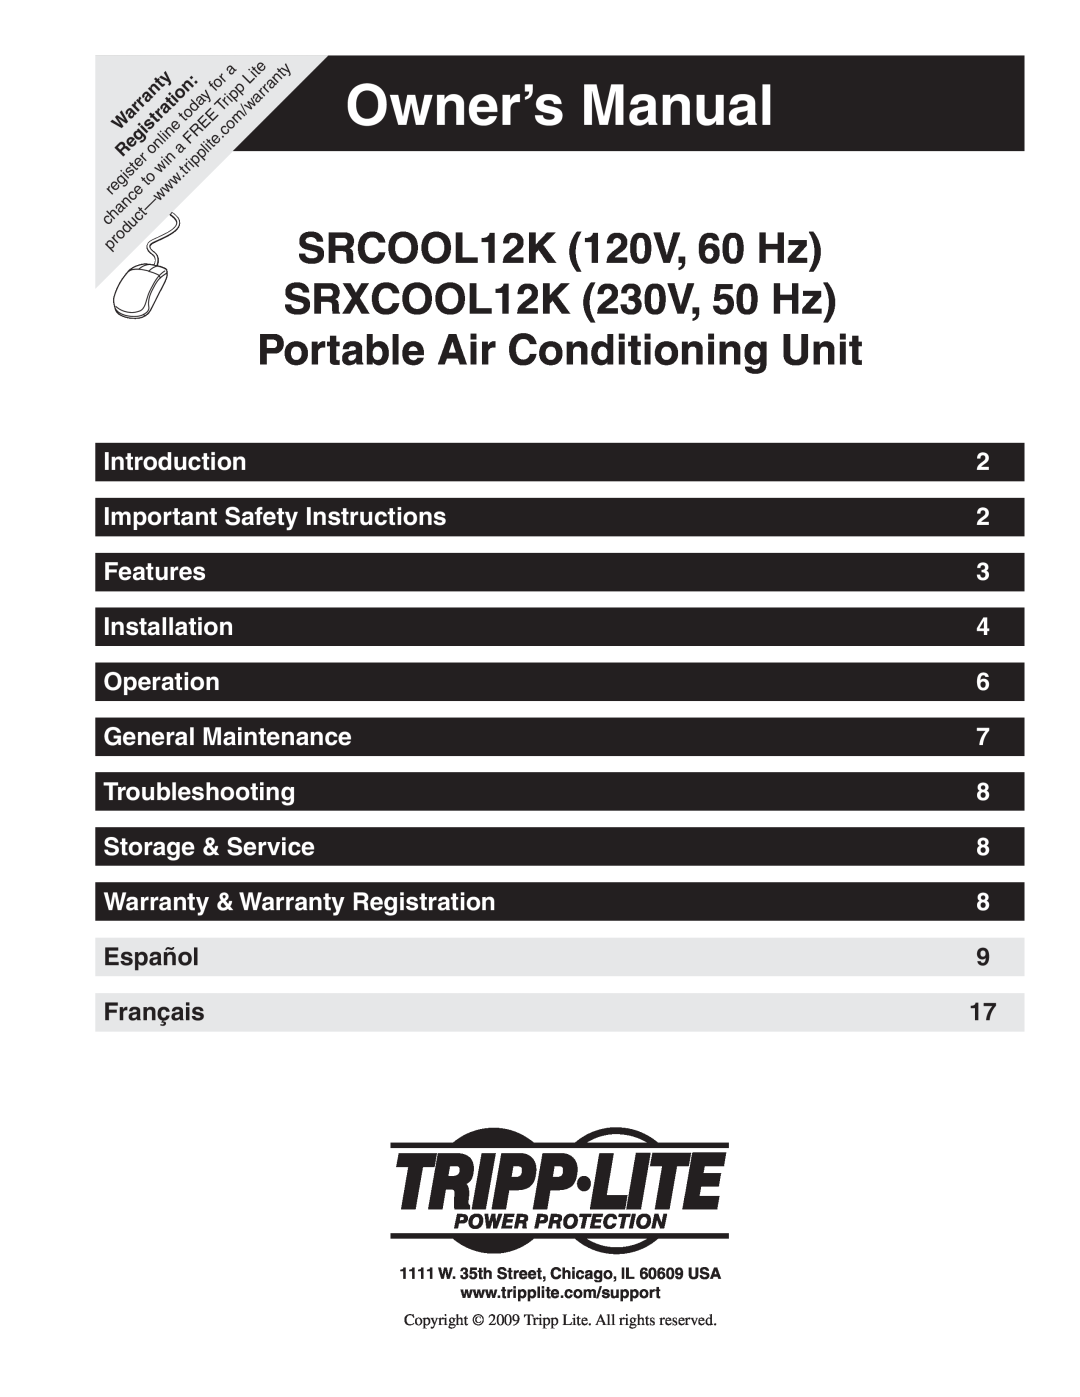 Tripp Lite owner manual SRXCOOL12K 230V, 50 Hz, Portable Air Conditioning Unit, SRCOOL12K 120V, 60 Hz 